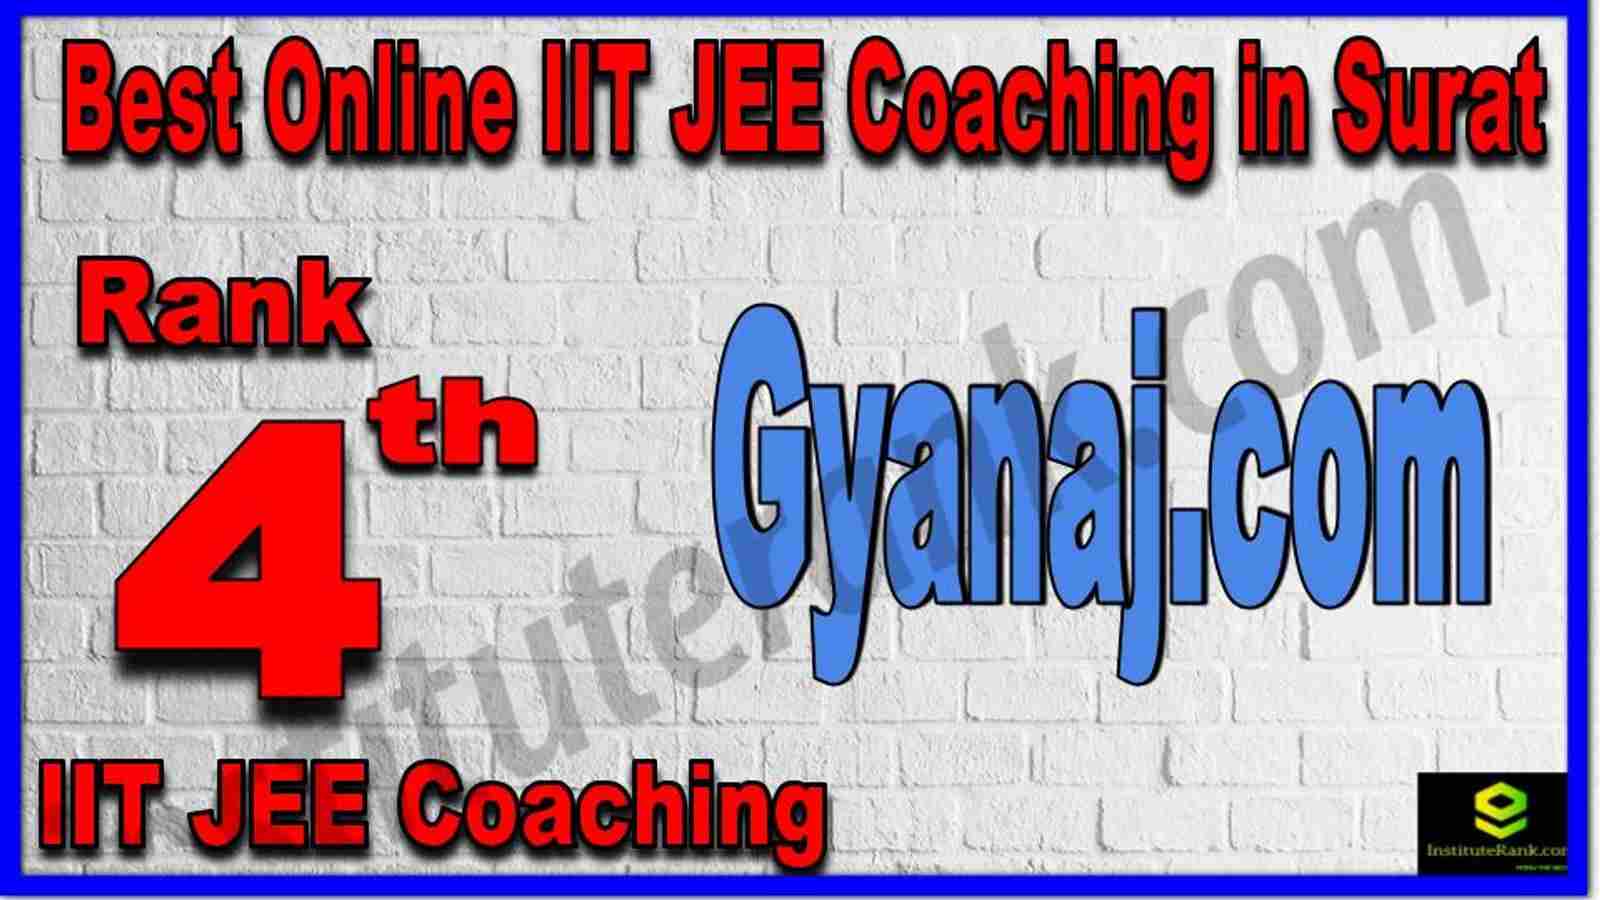 Rank 4th Best Online IIT JEE Coaching in Surat